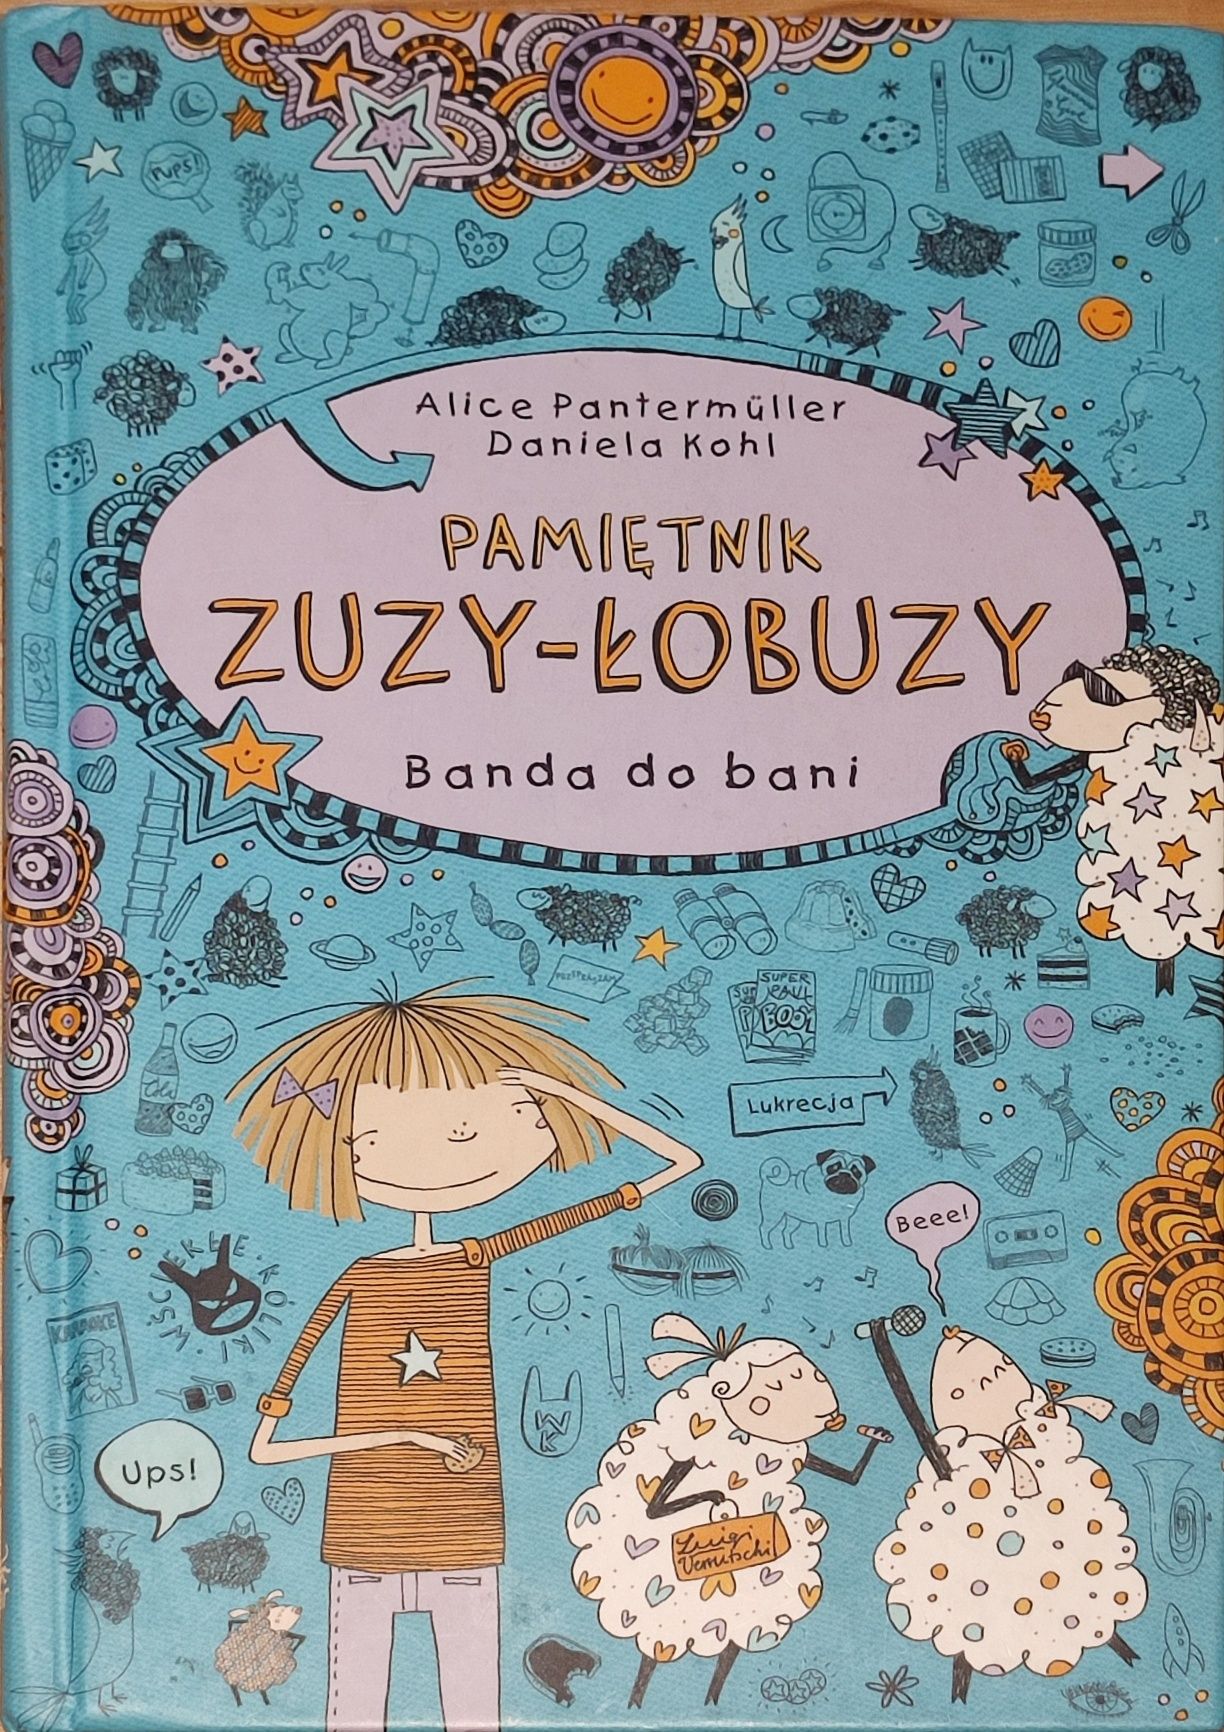 Pamiętnik Zuzy - Łonuzy. Banda do bani. Pantermüller, Kohl.